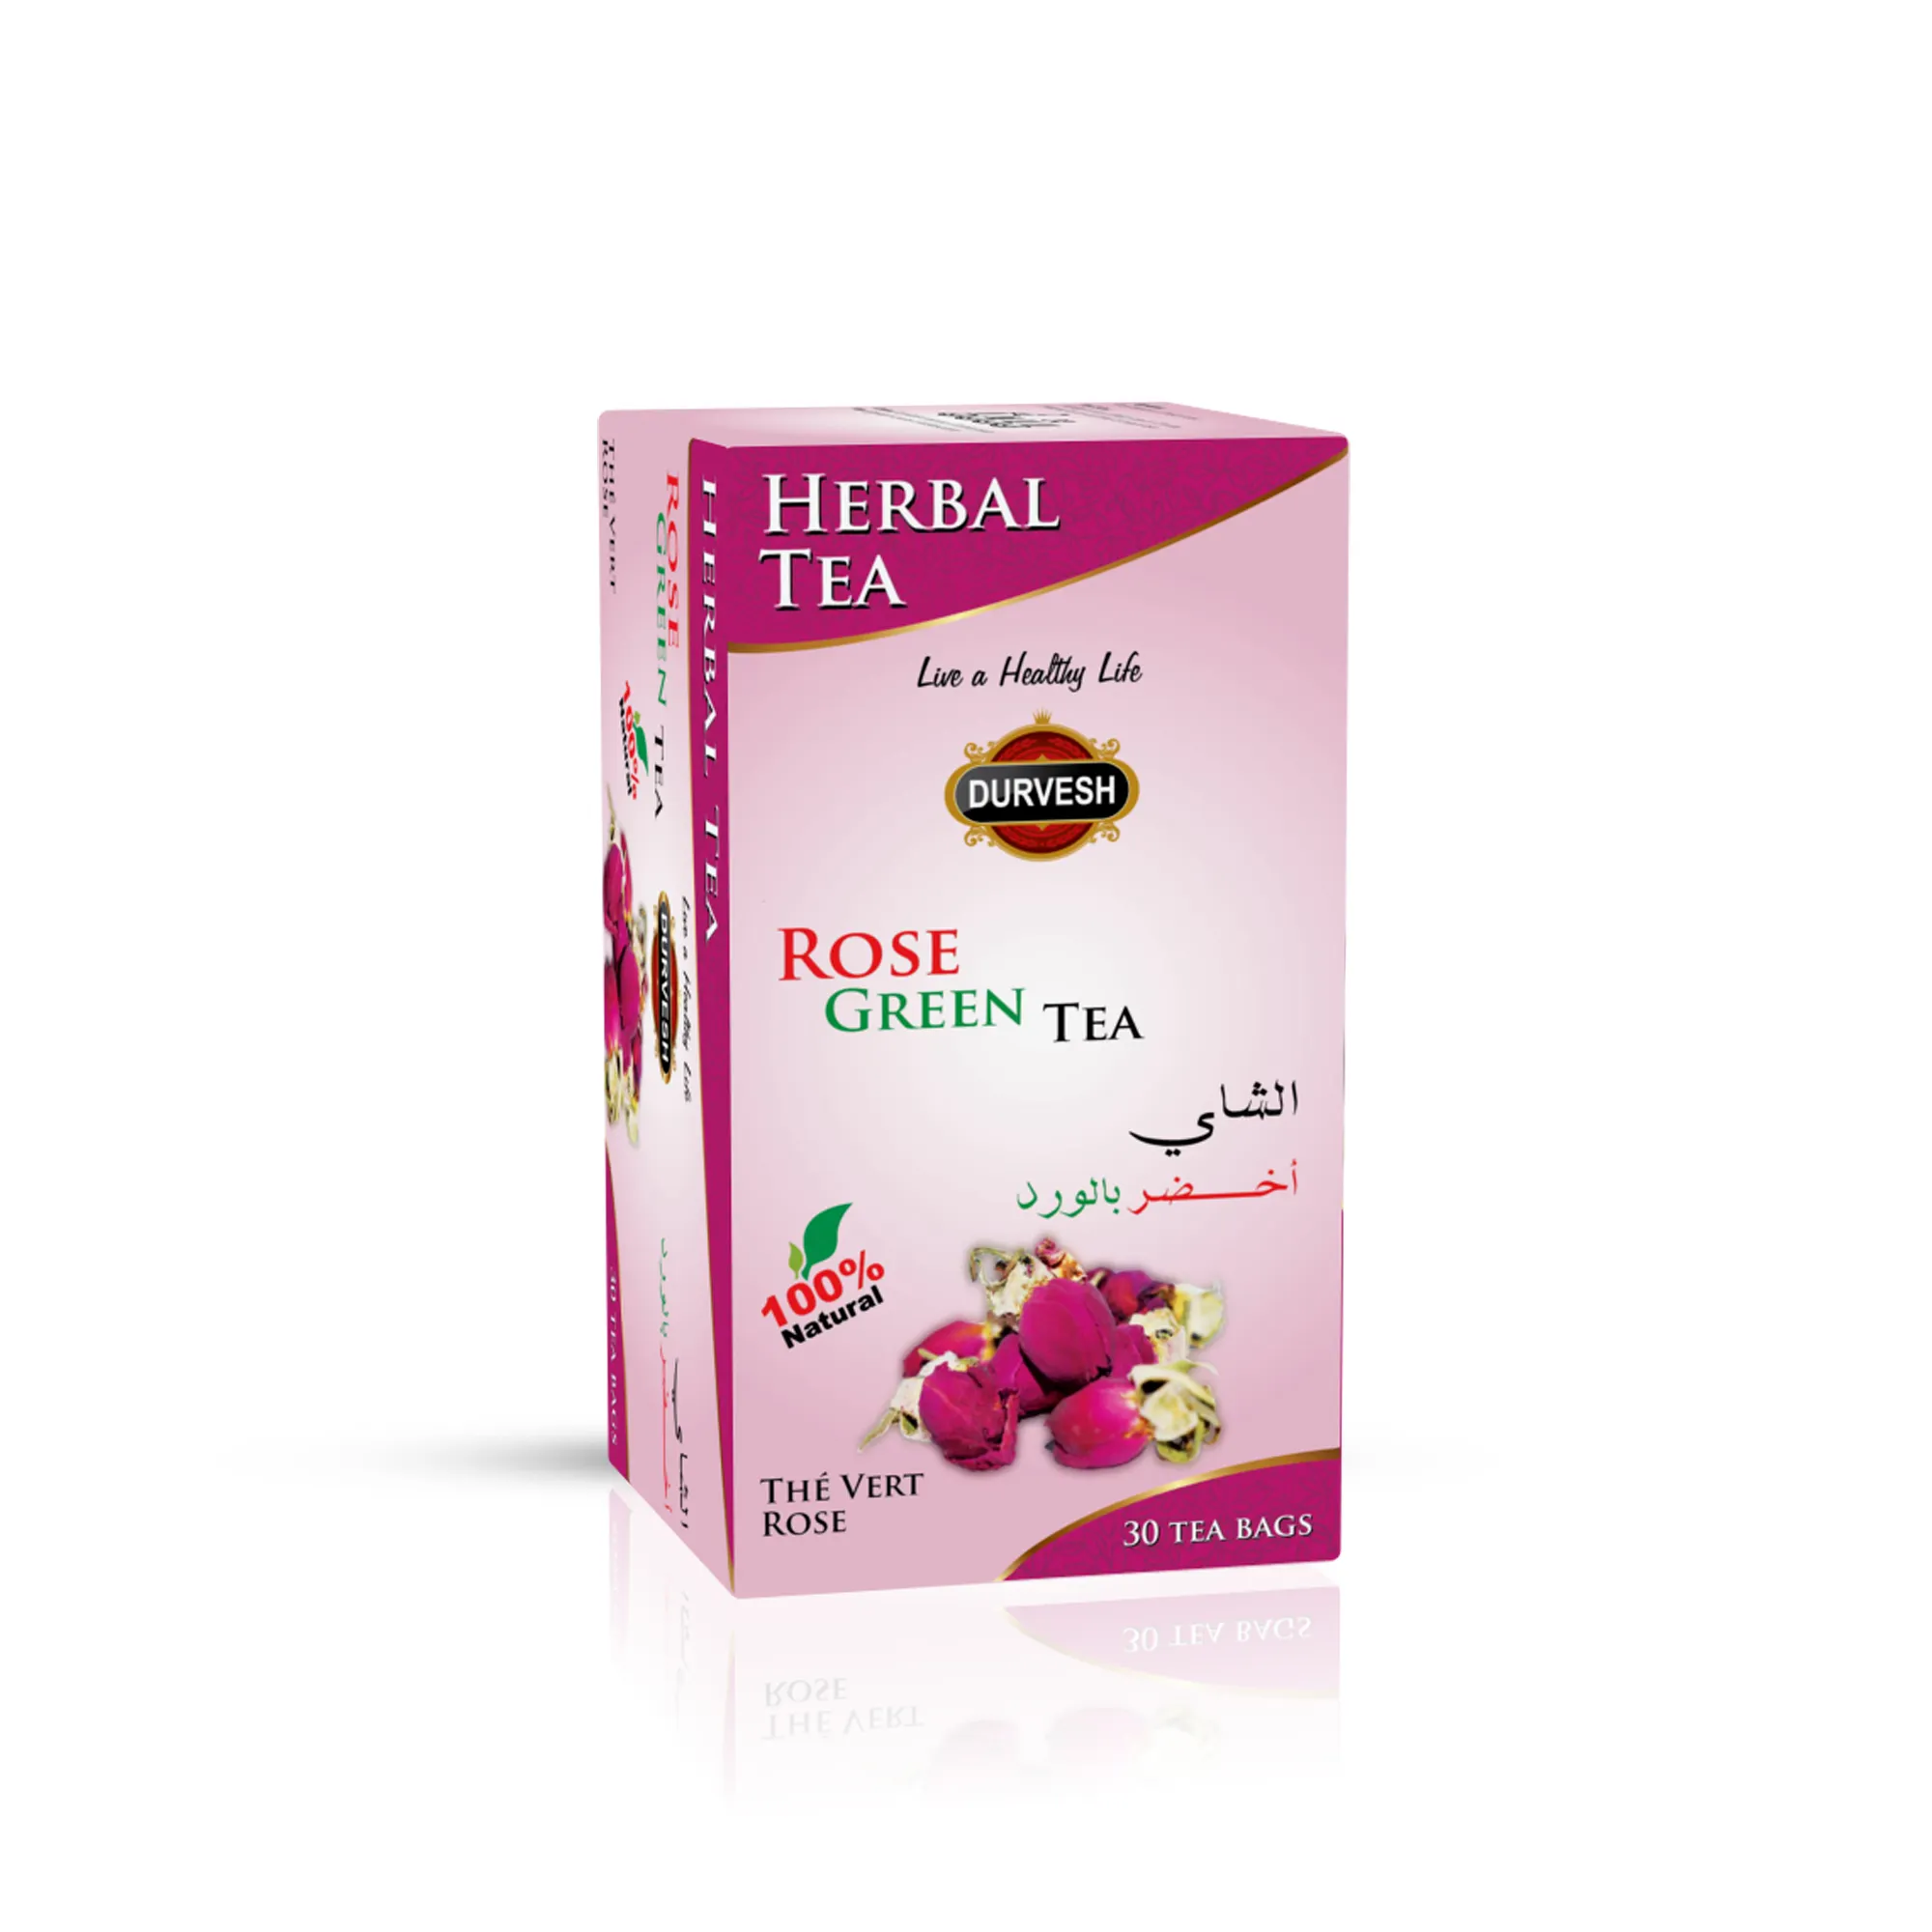 ROSE GREEN TEA 30SACHET PER BOX 24BOX PER CATON 100% PURE & NATURAL TEA